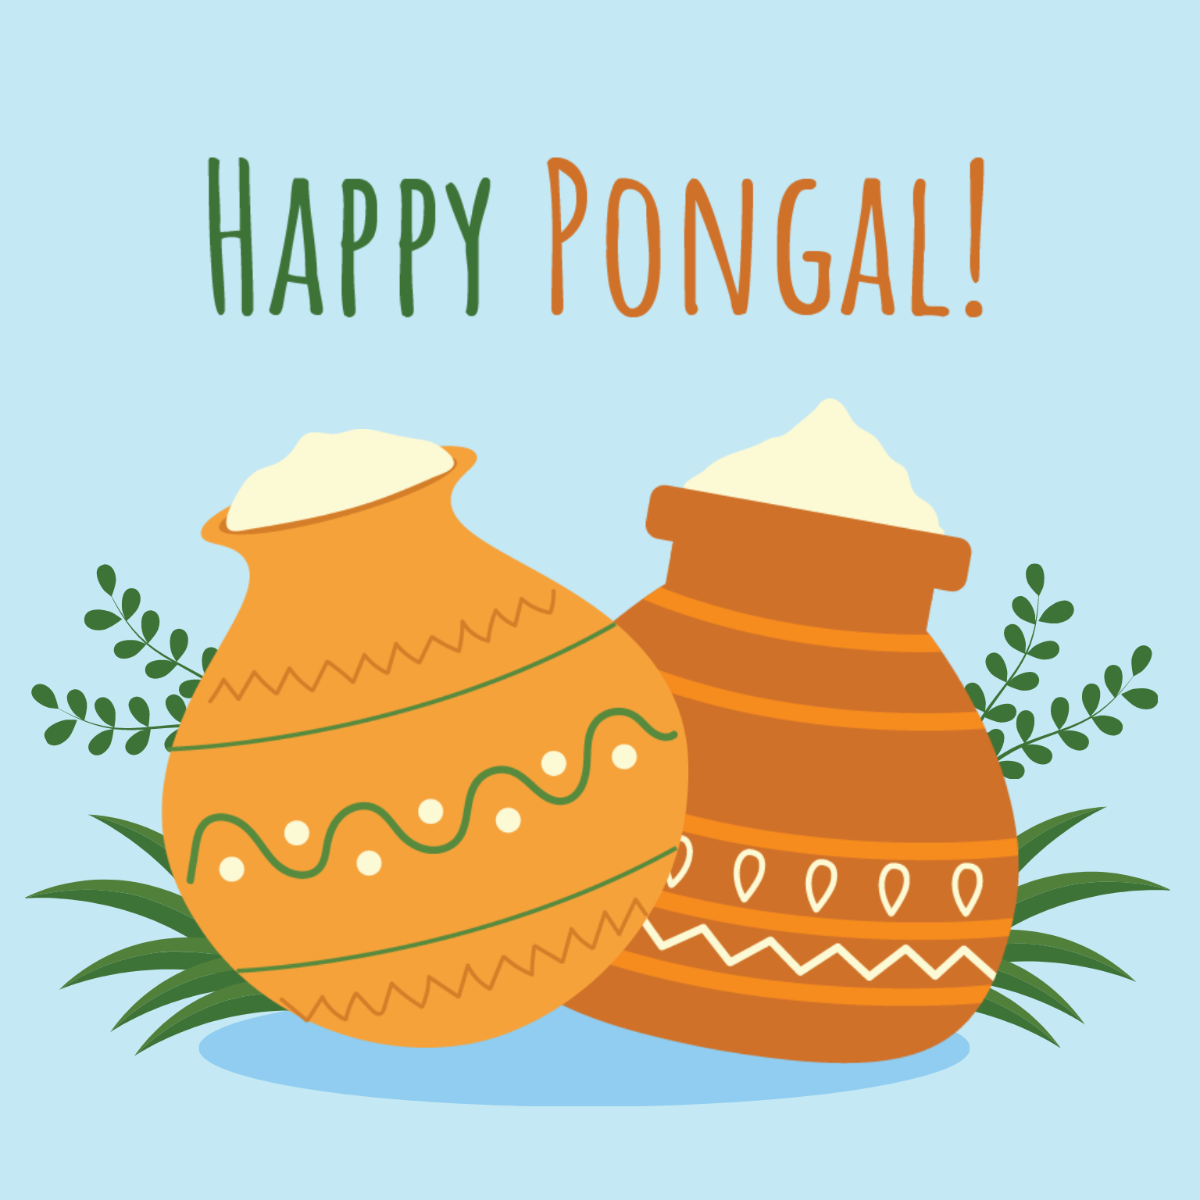 Happy Pongal Vector